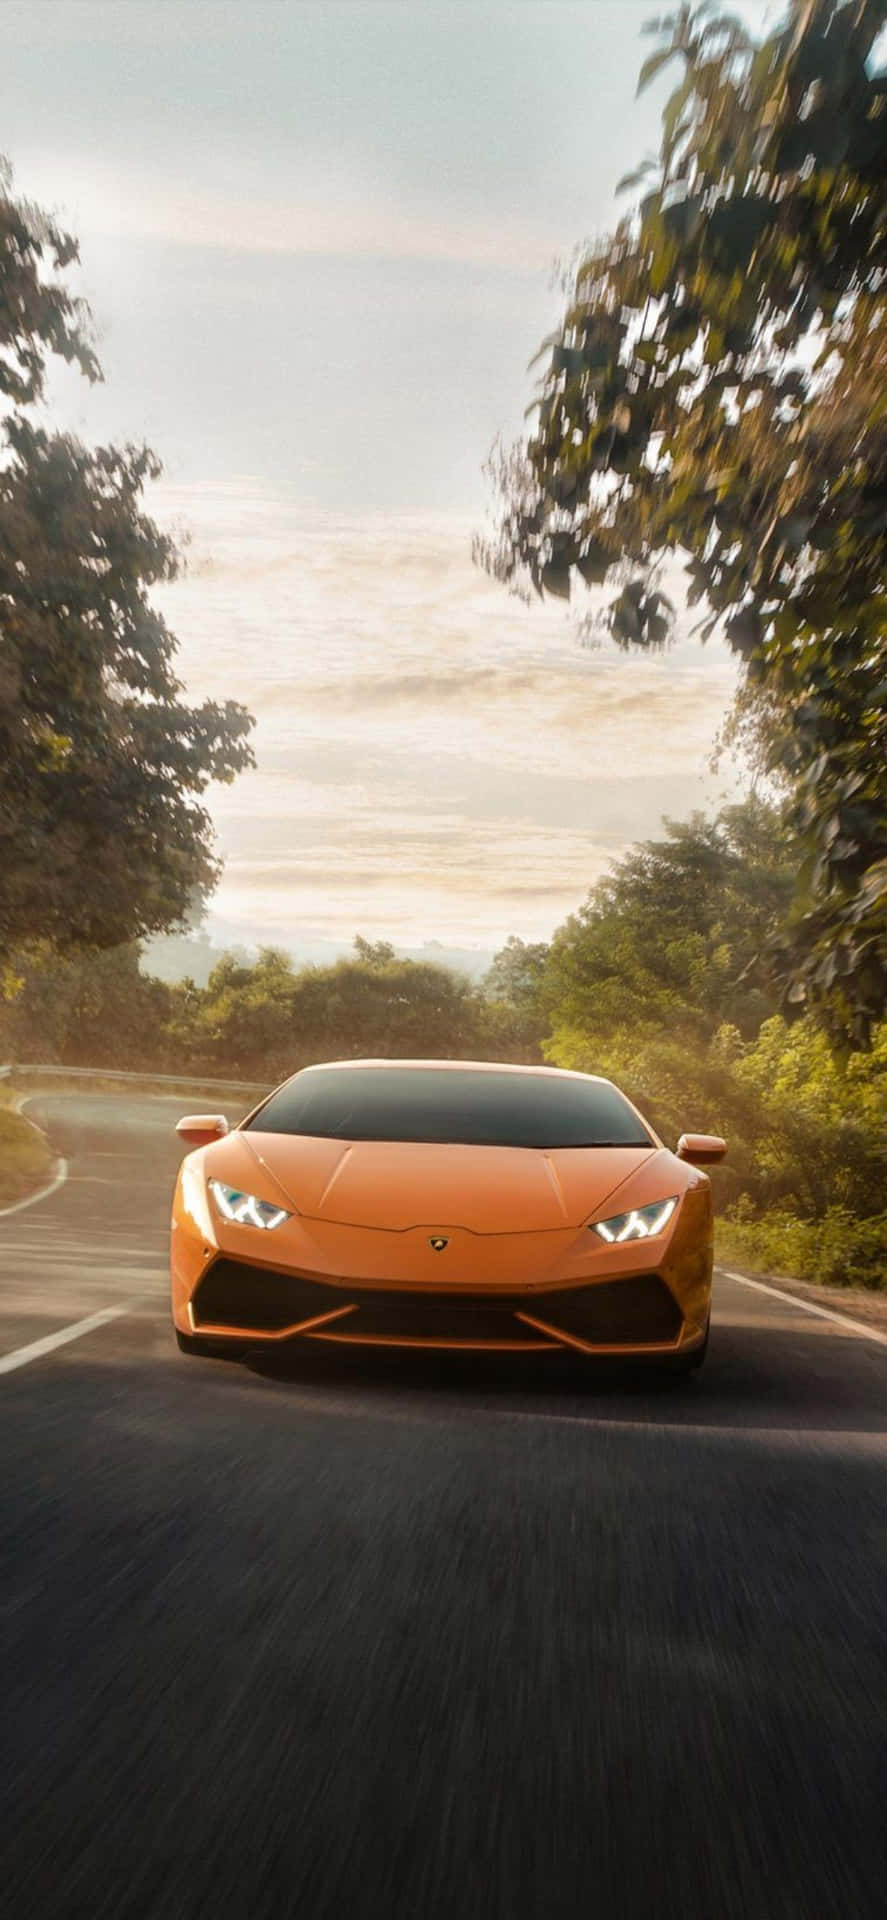 Fåden Senaste Lamborghinin Med Nya Iphone X Som Bakgrundsbild.